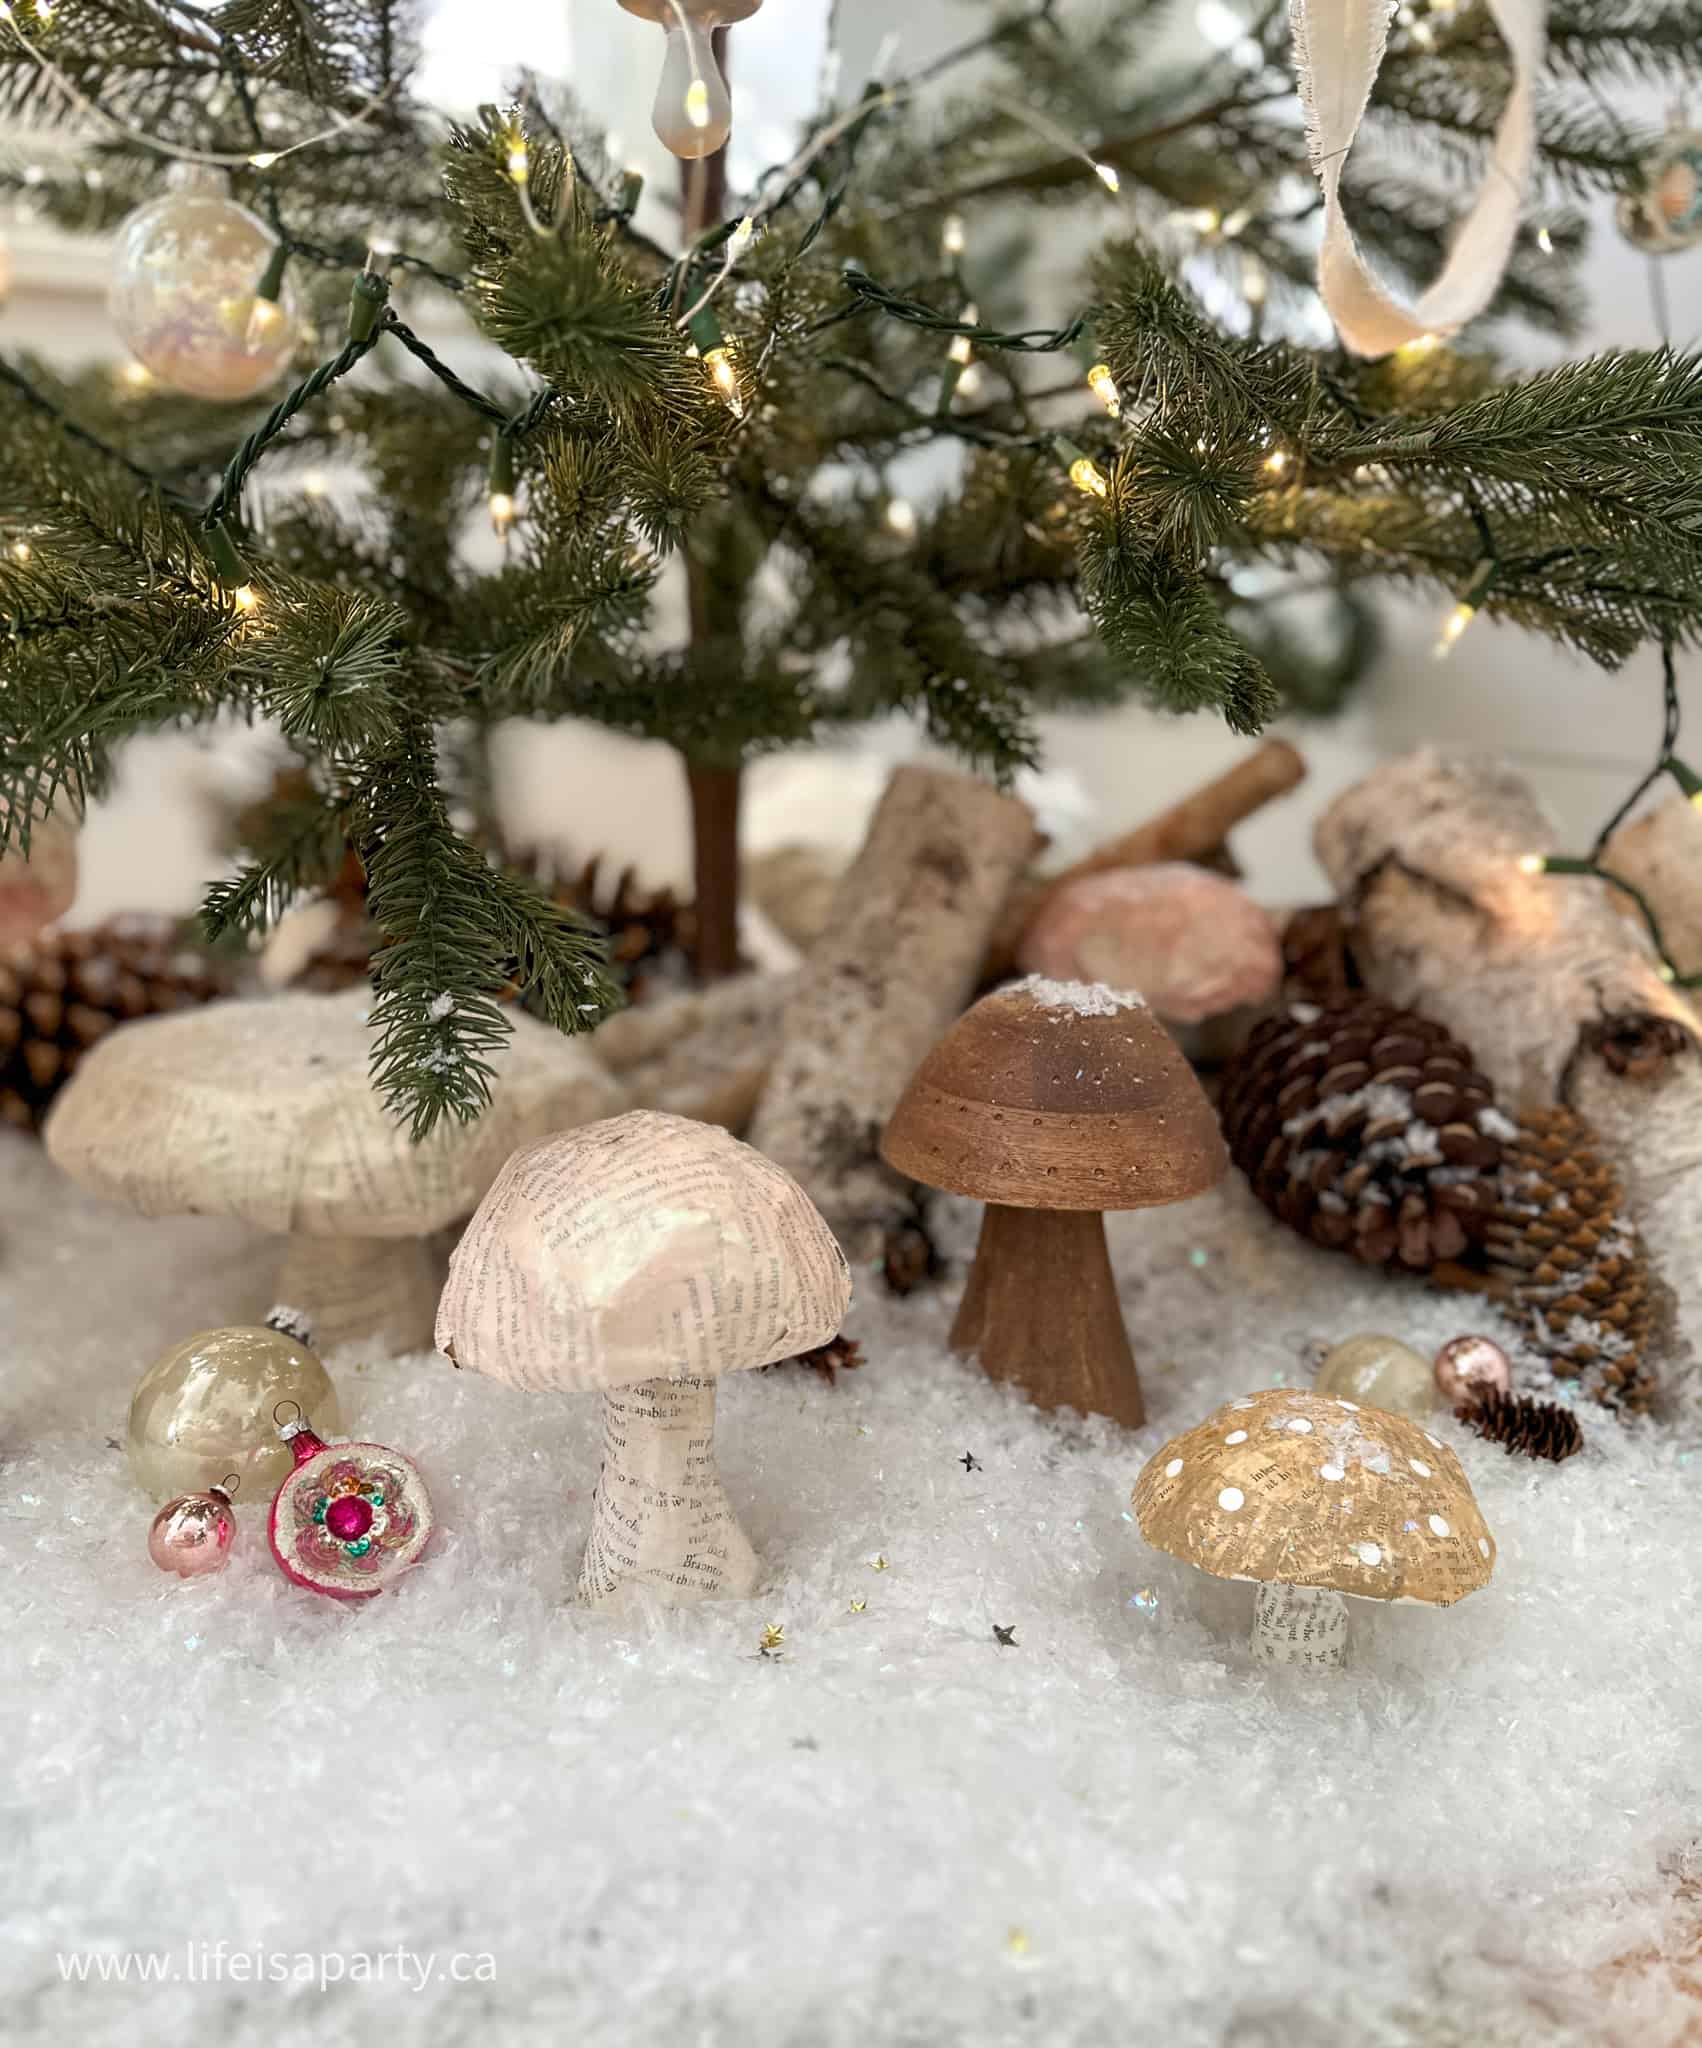 mushrooms under a Christmas tree